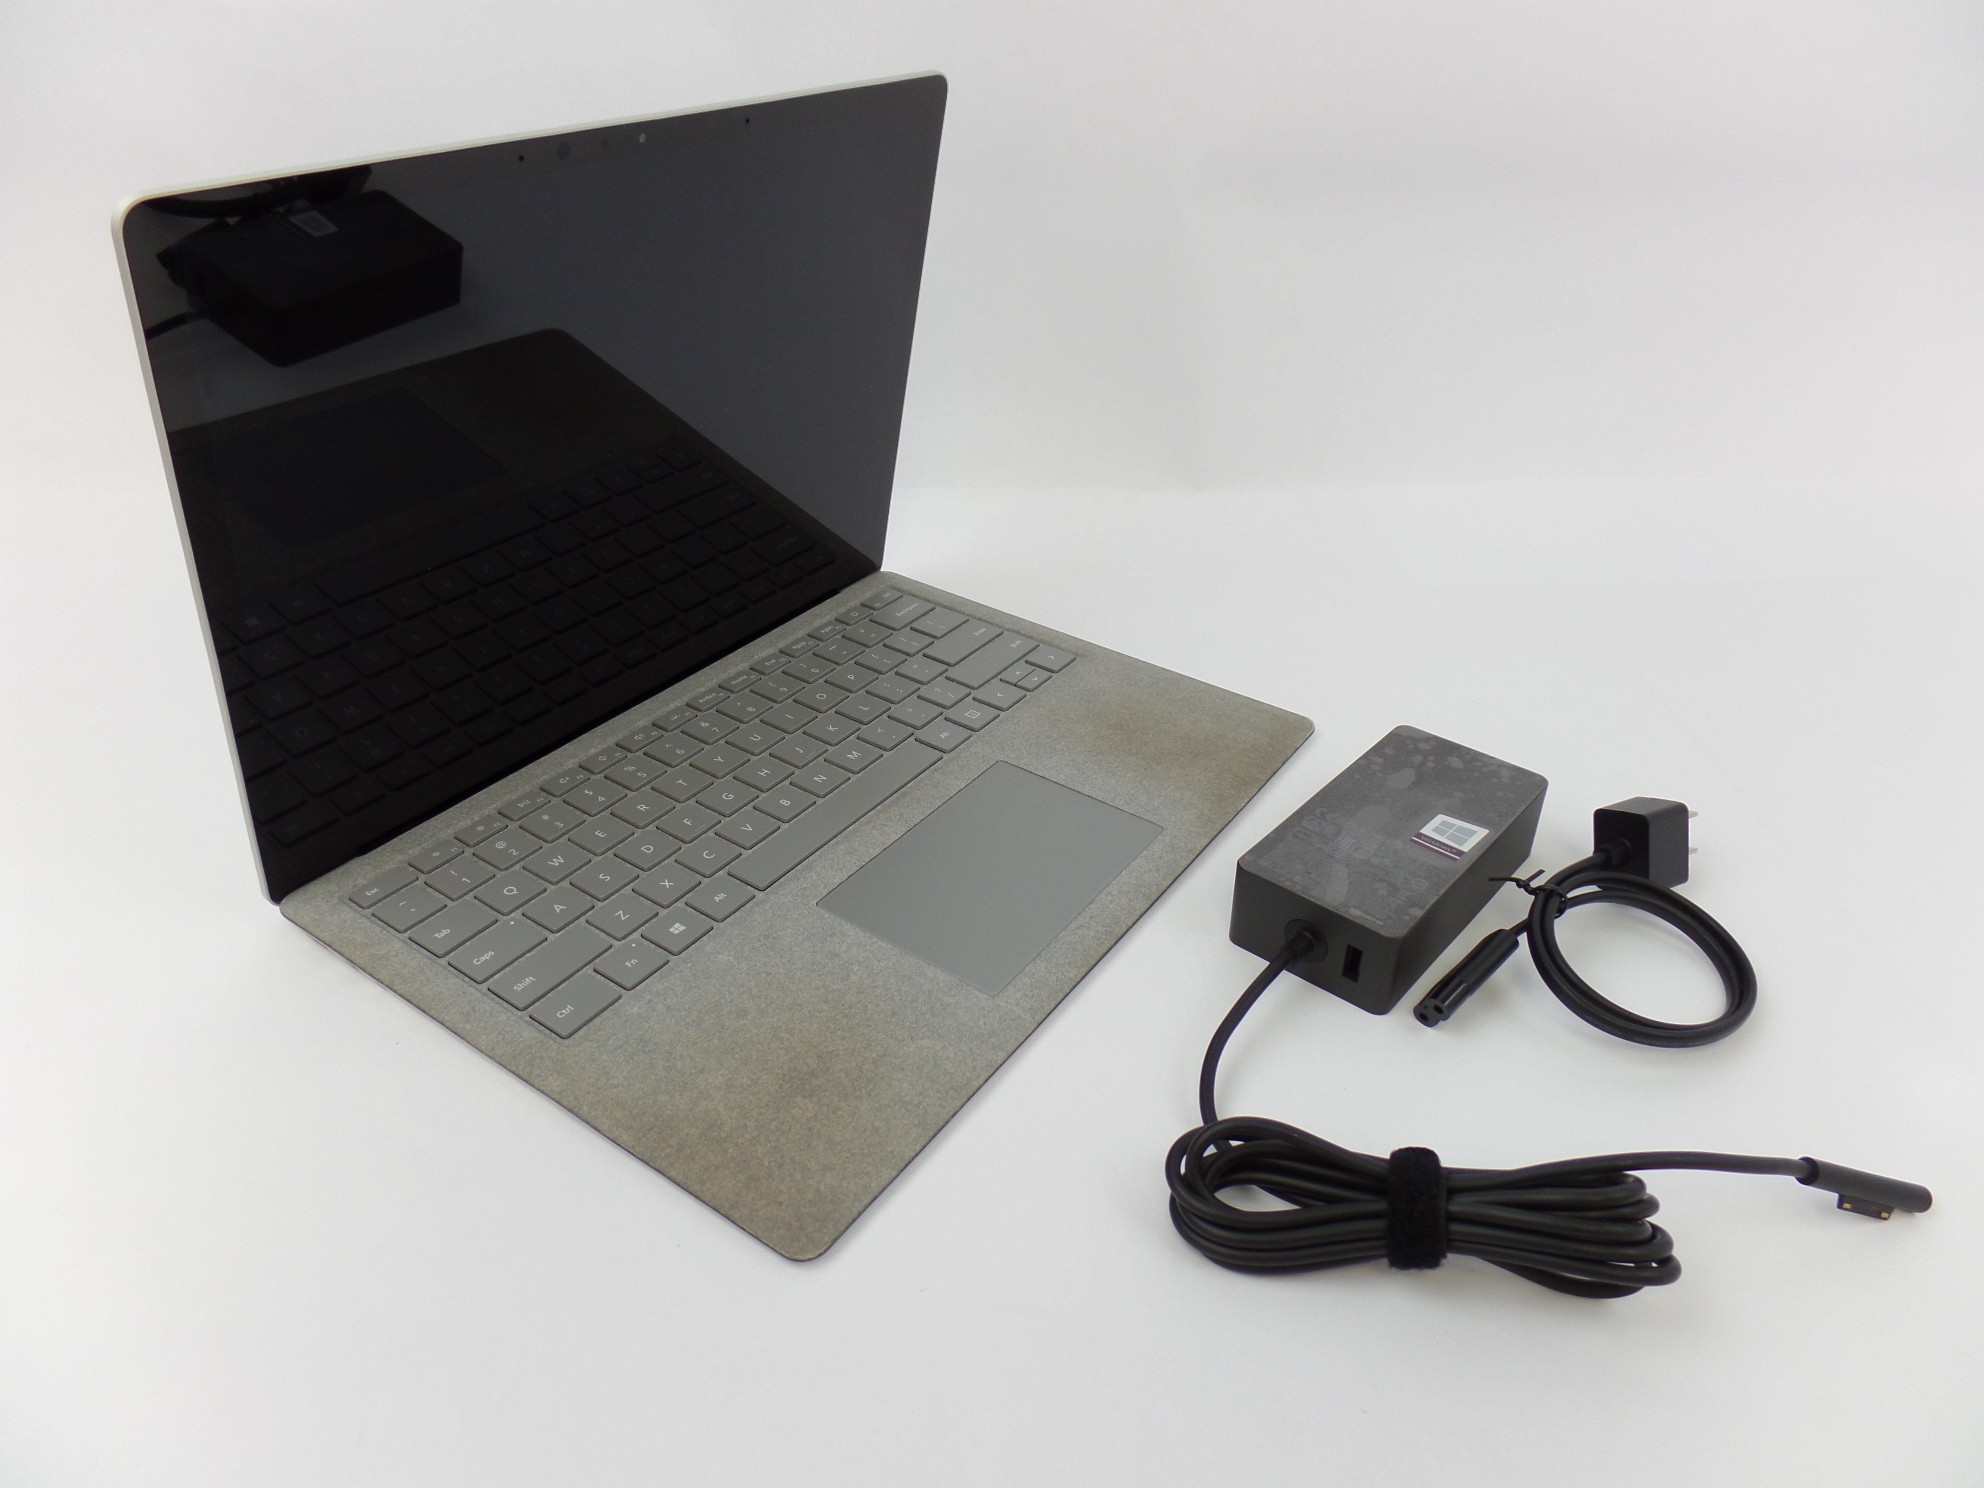 Read: Microsoft Surface Laptop 1769 13.5" Touch i5-7200 2.5GHz 4GB 128GB W10P U2